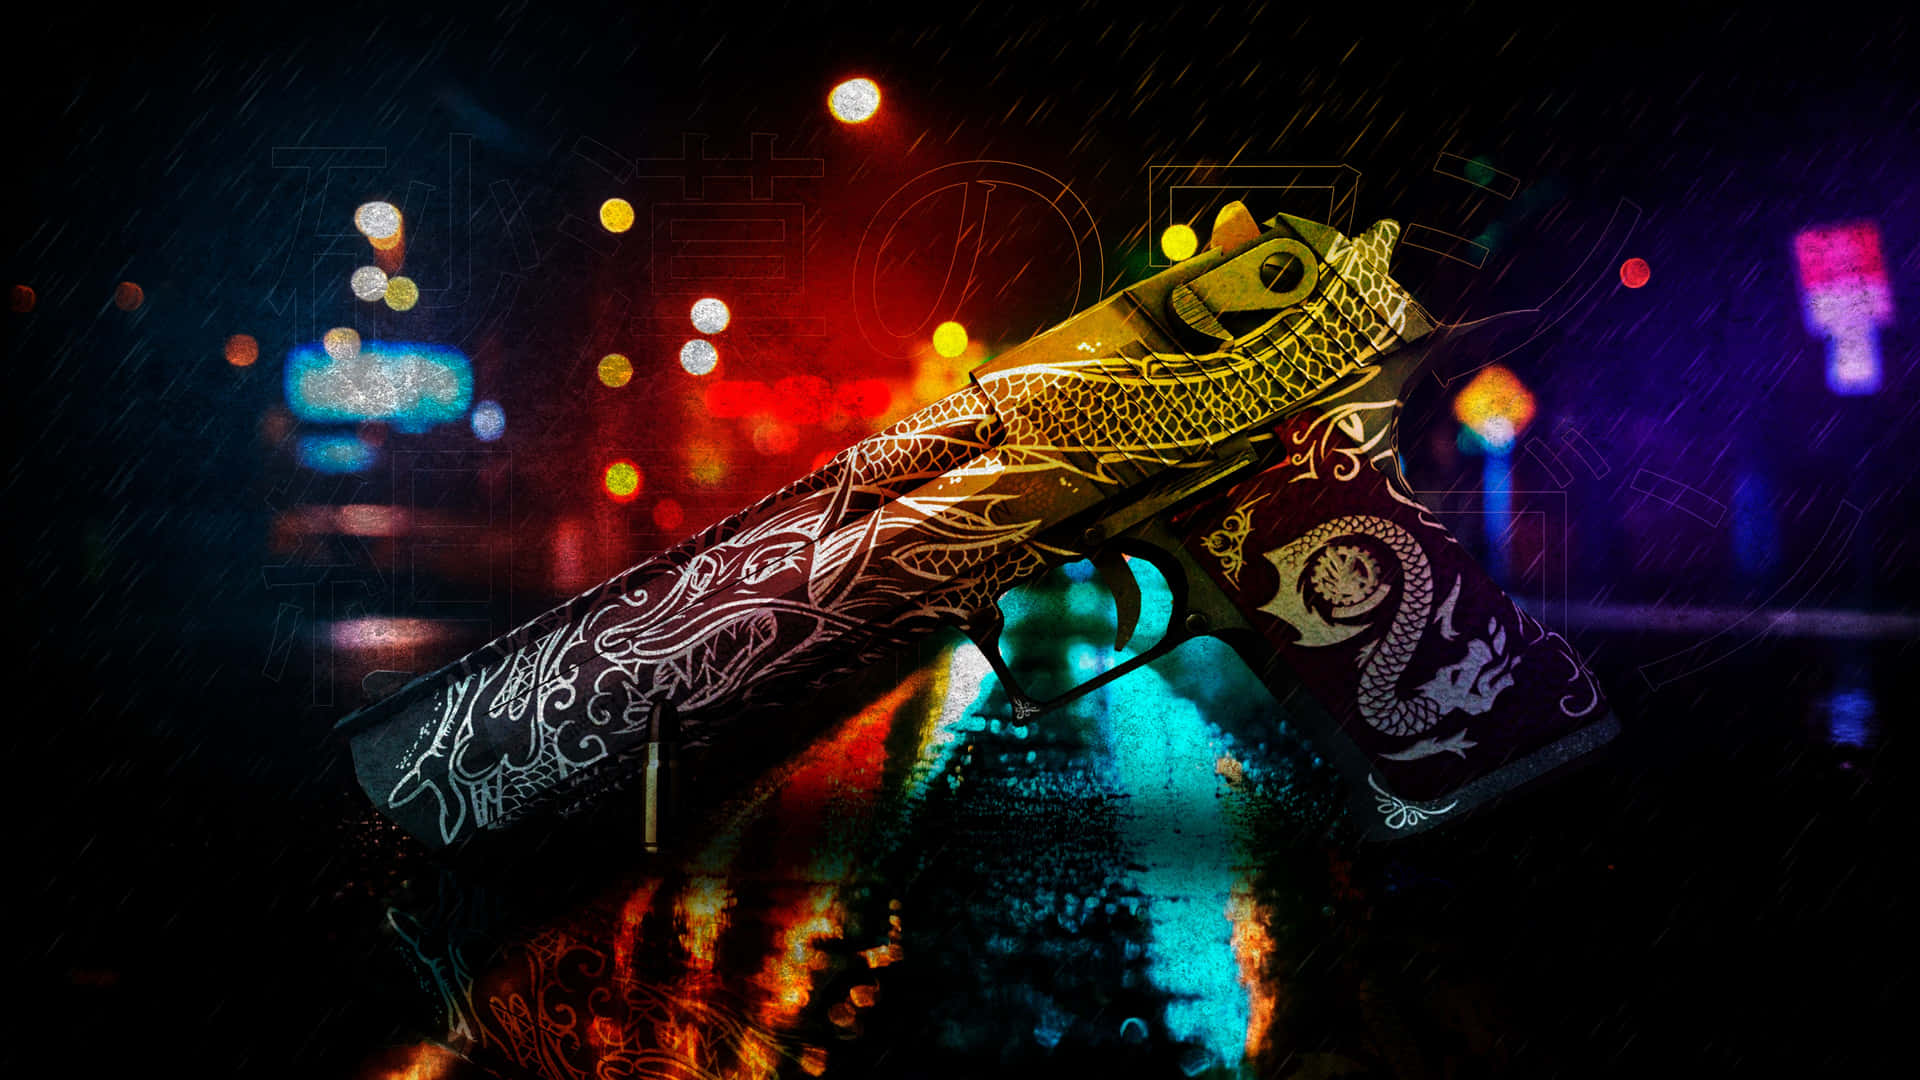 4k Counter-strike Global Offensive Background Handgun With A Dragon Design Background